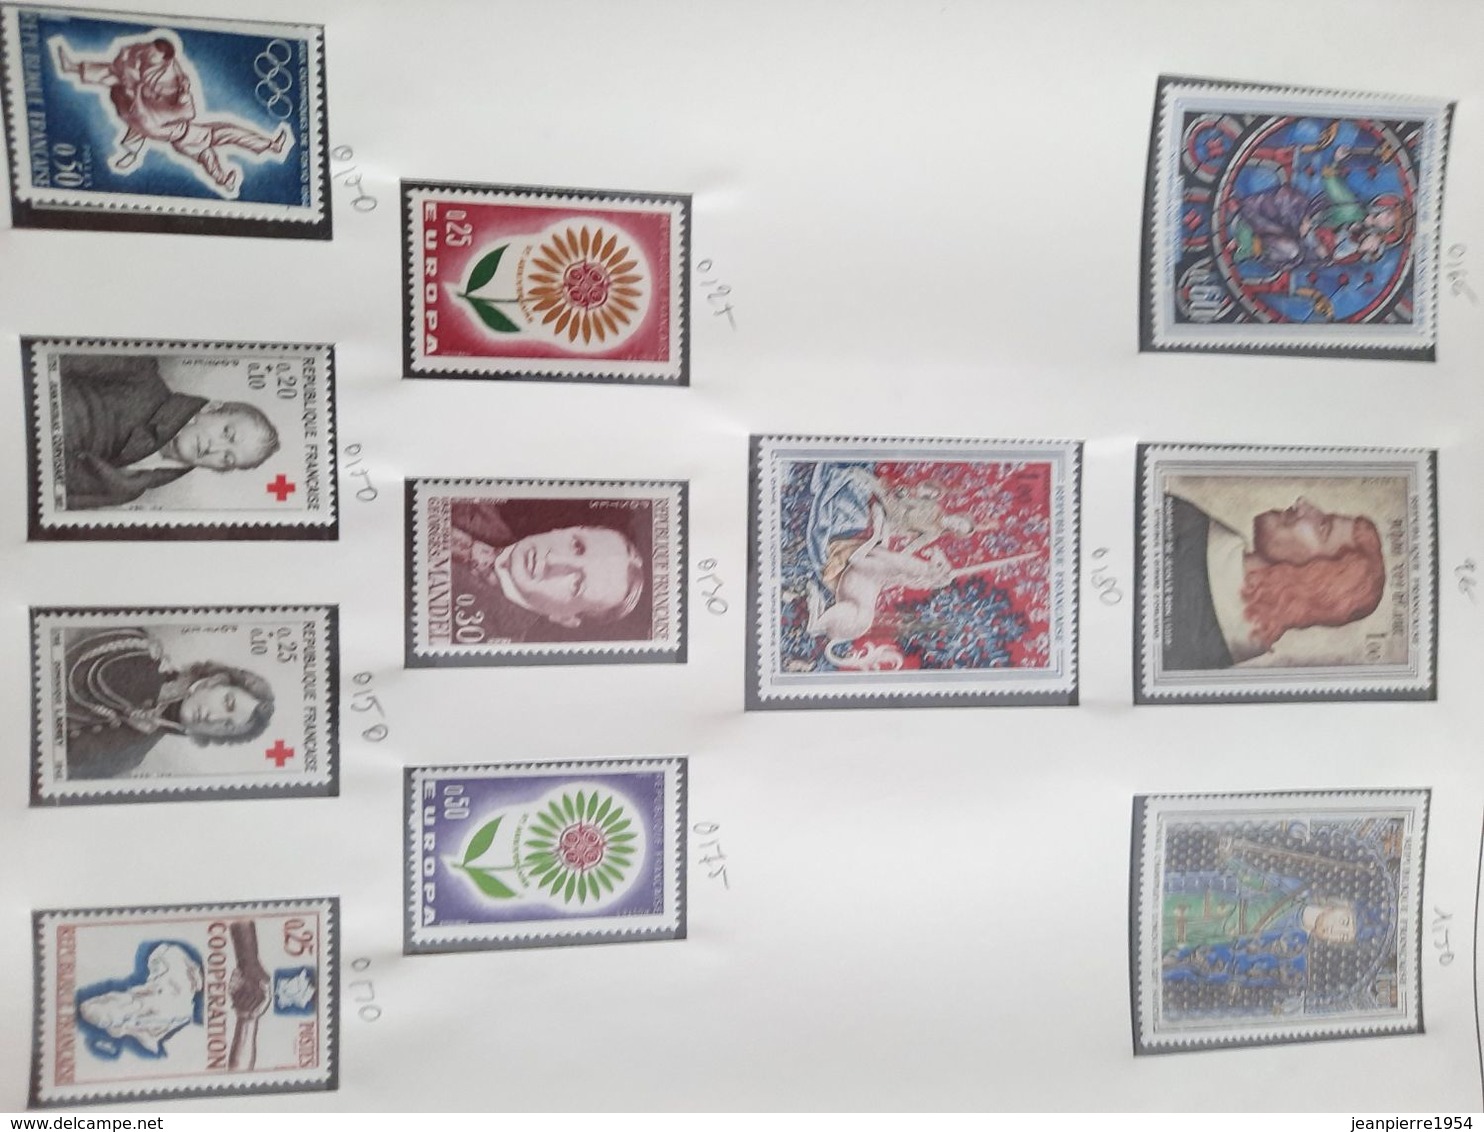 album timbres timbres français neuf et oblitere